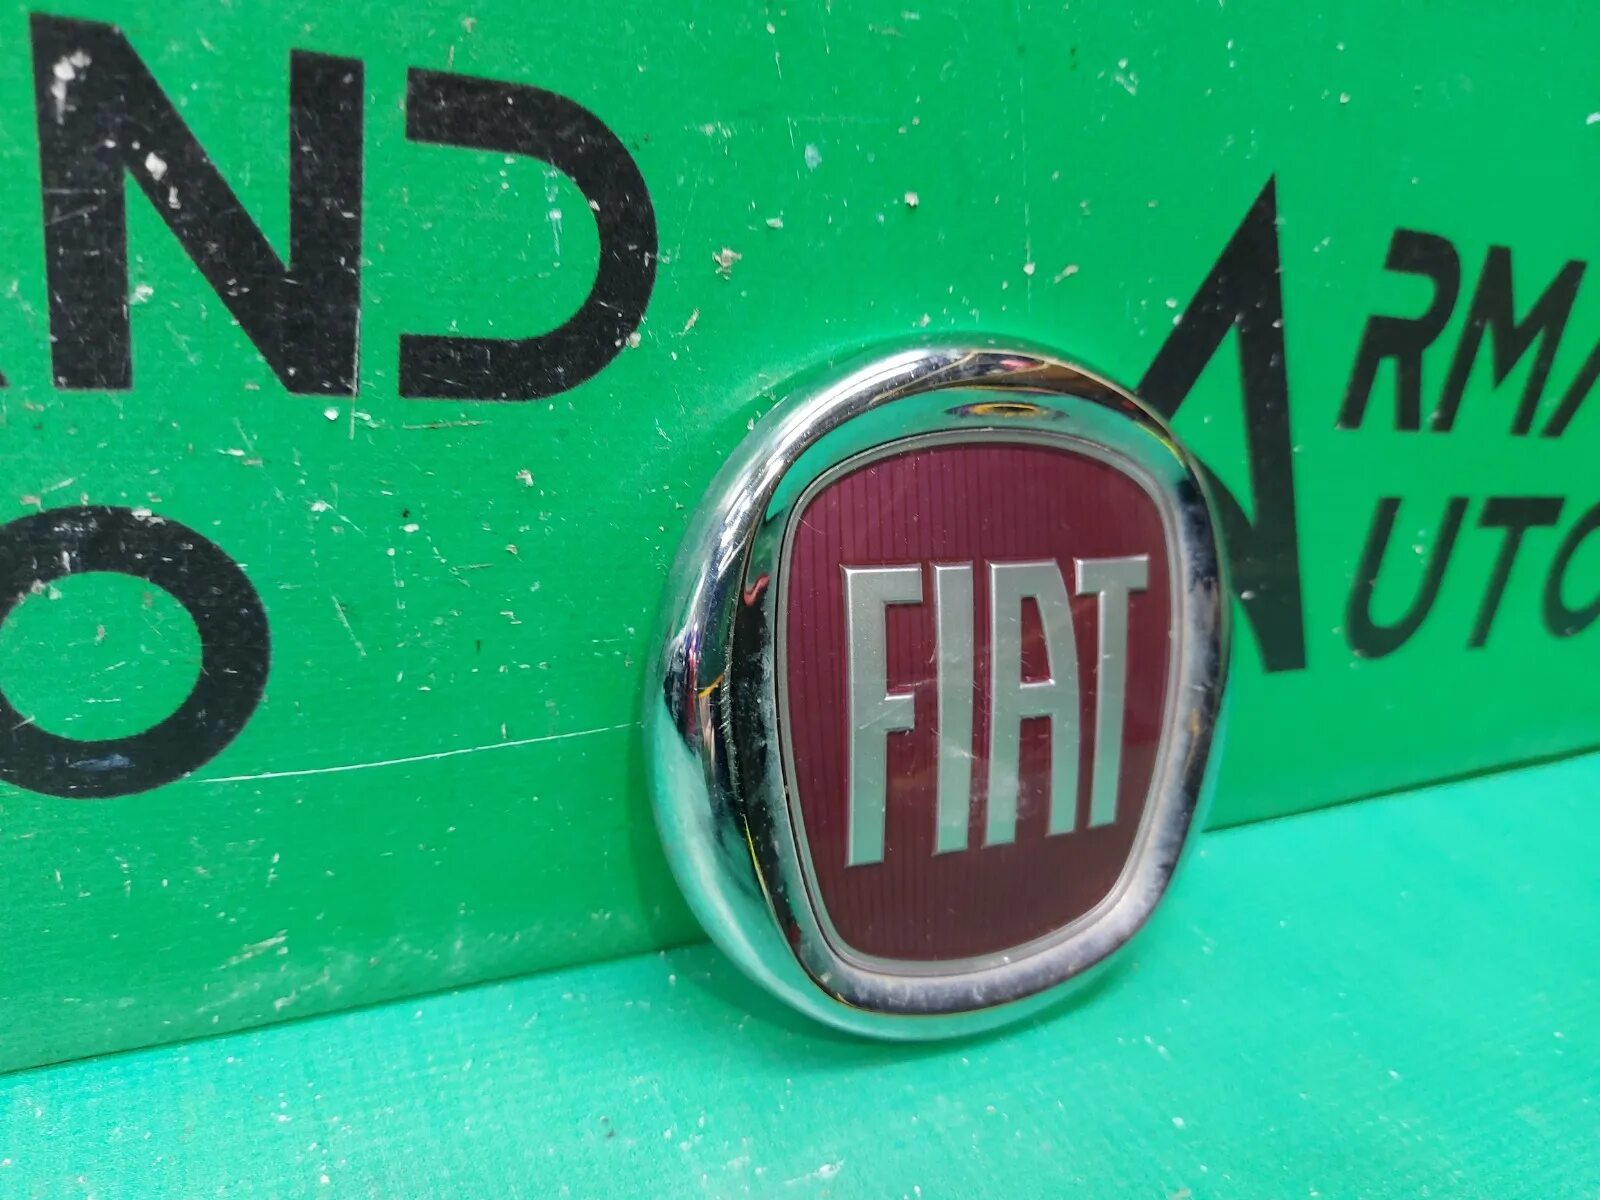 Фиат логобрава. Задняя эмблема Fiat. Фиат Браво лого Форд. Поставь Фиат Браво лого.